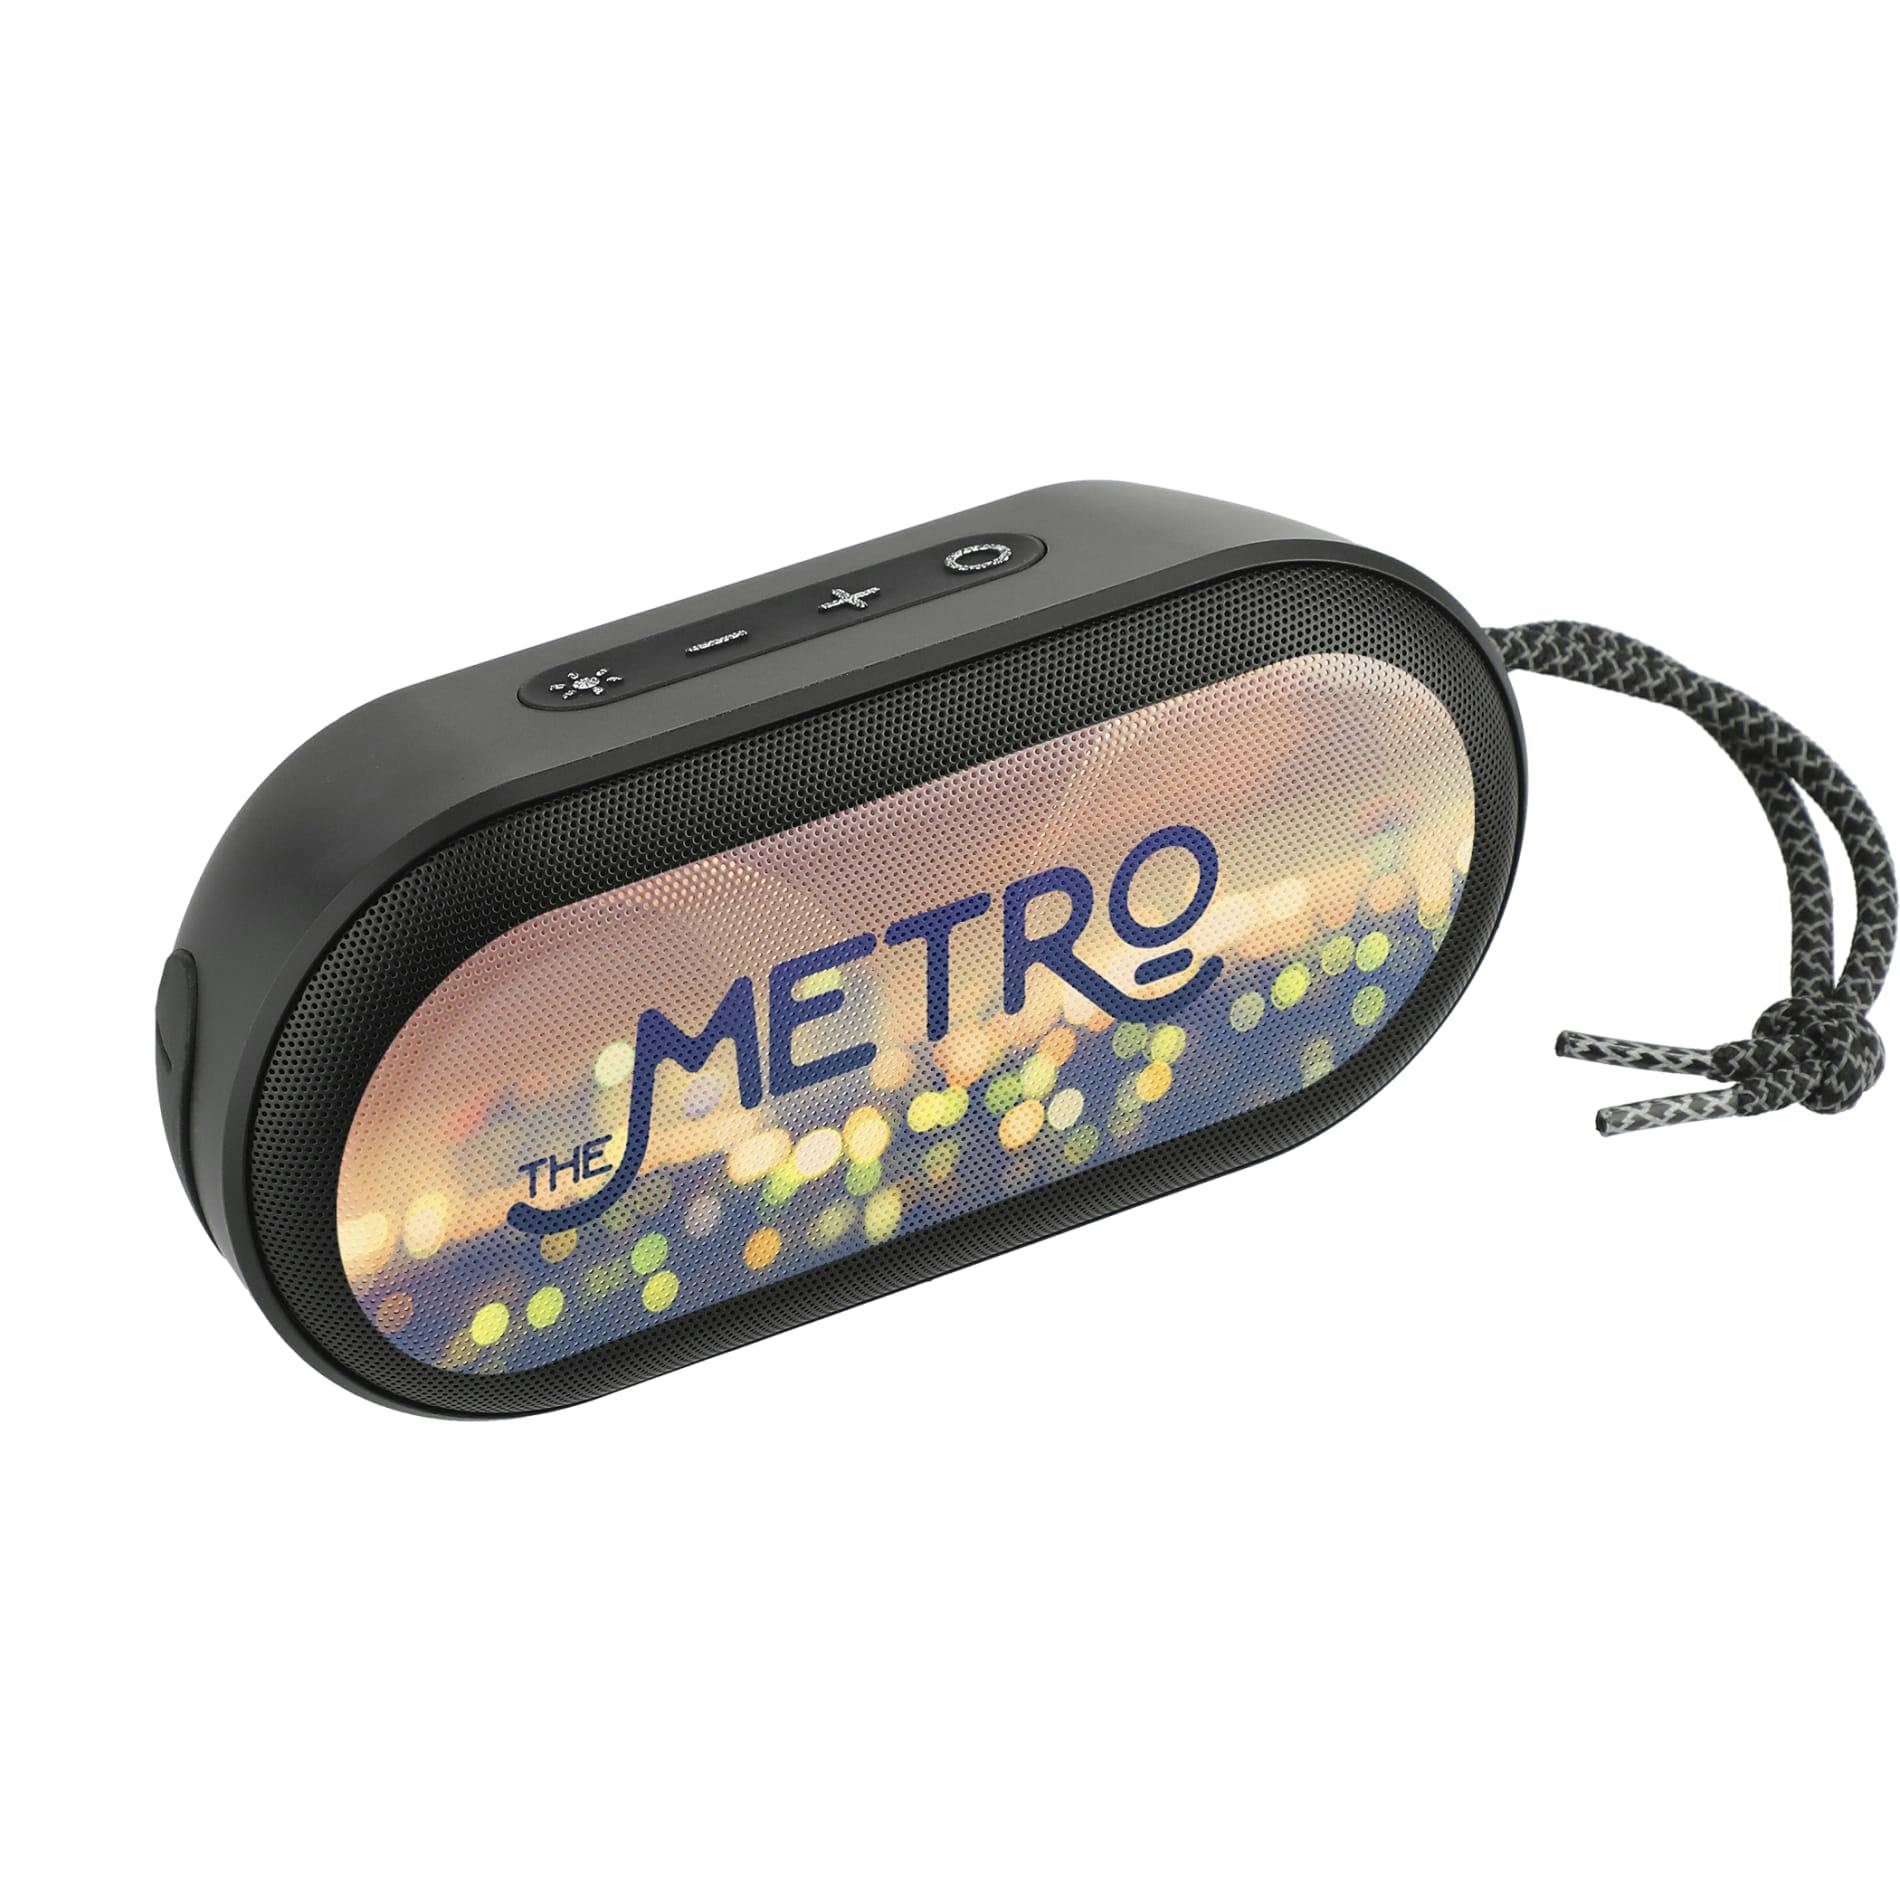 Zedd Outdoor Speaker with RGB Lights - additional Image 1